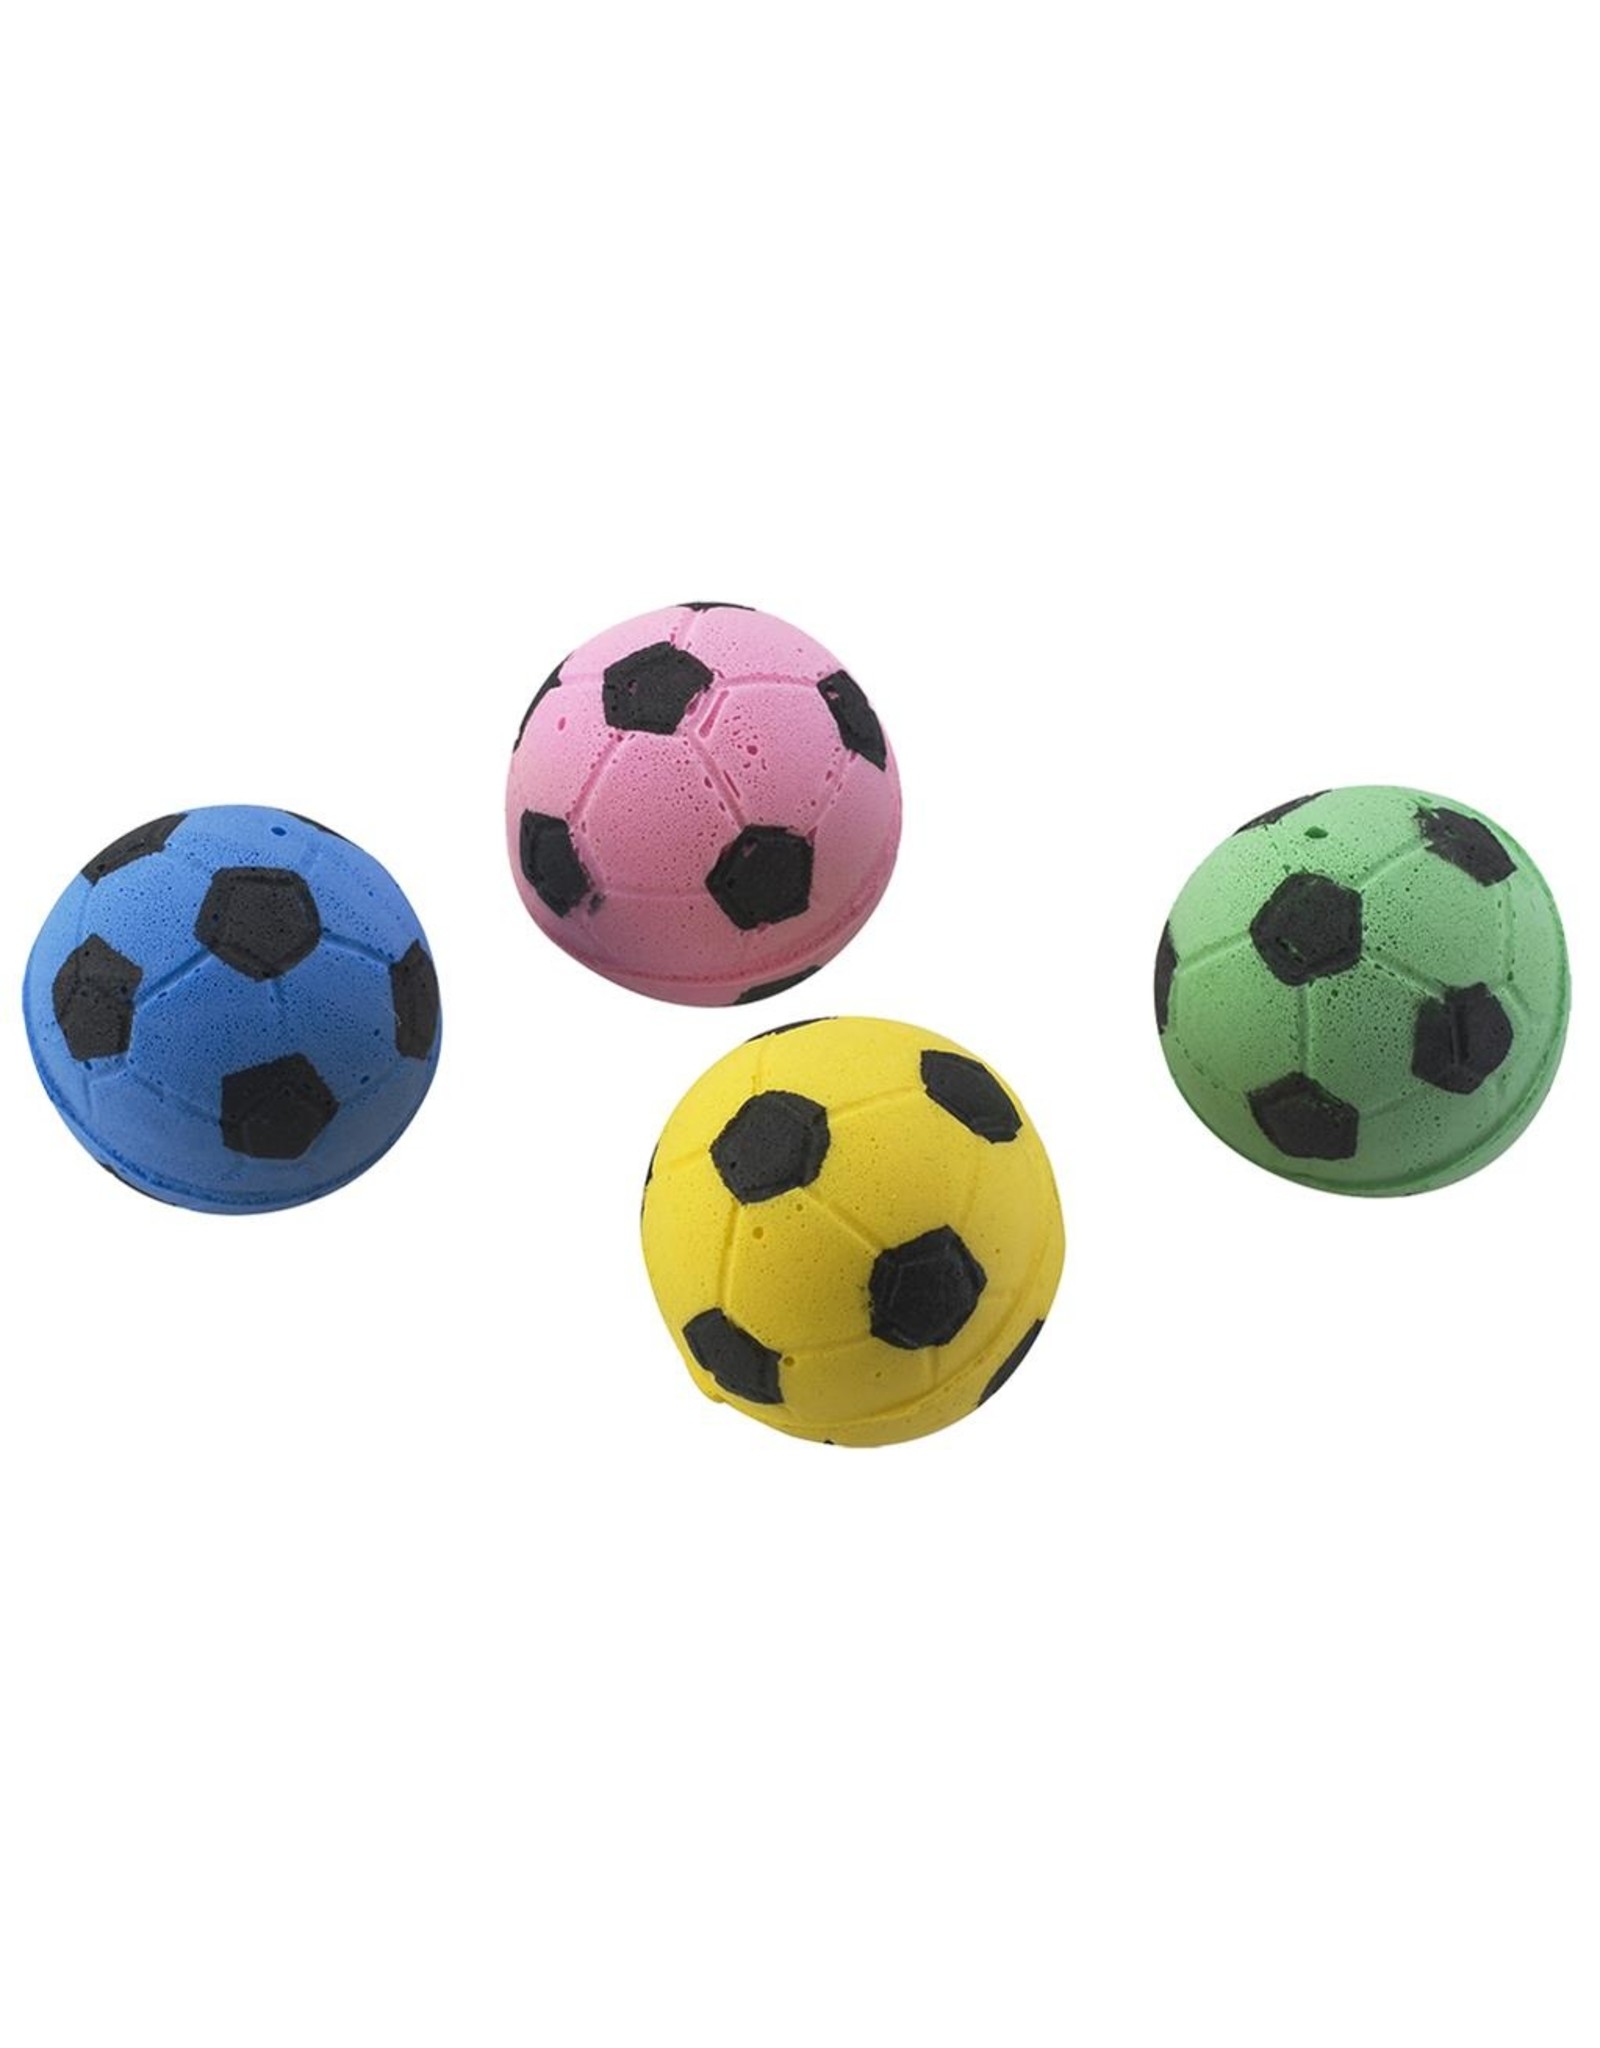 Spot - Ethical Pet Products Sponge Soccer Balls 4PK